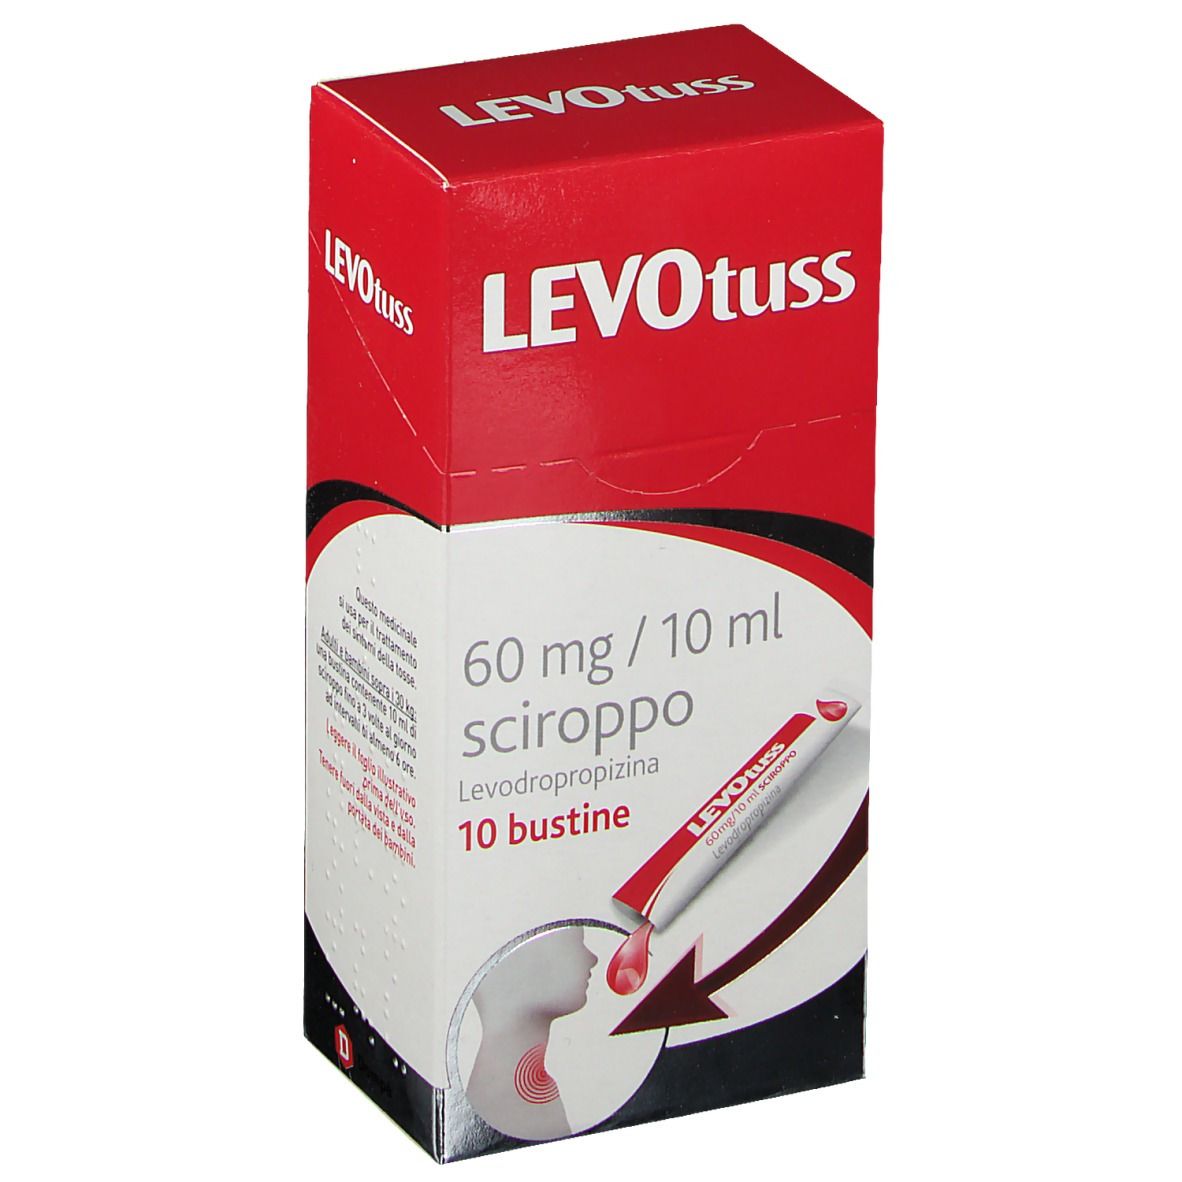 Image of LEVOtuss 60 mg/10 ml Sciroppo